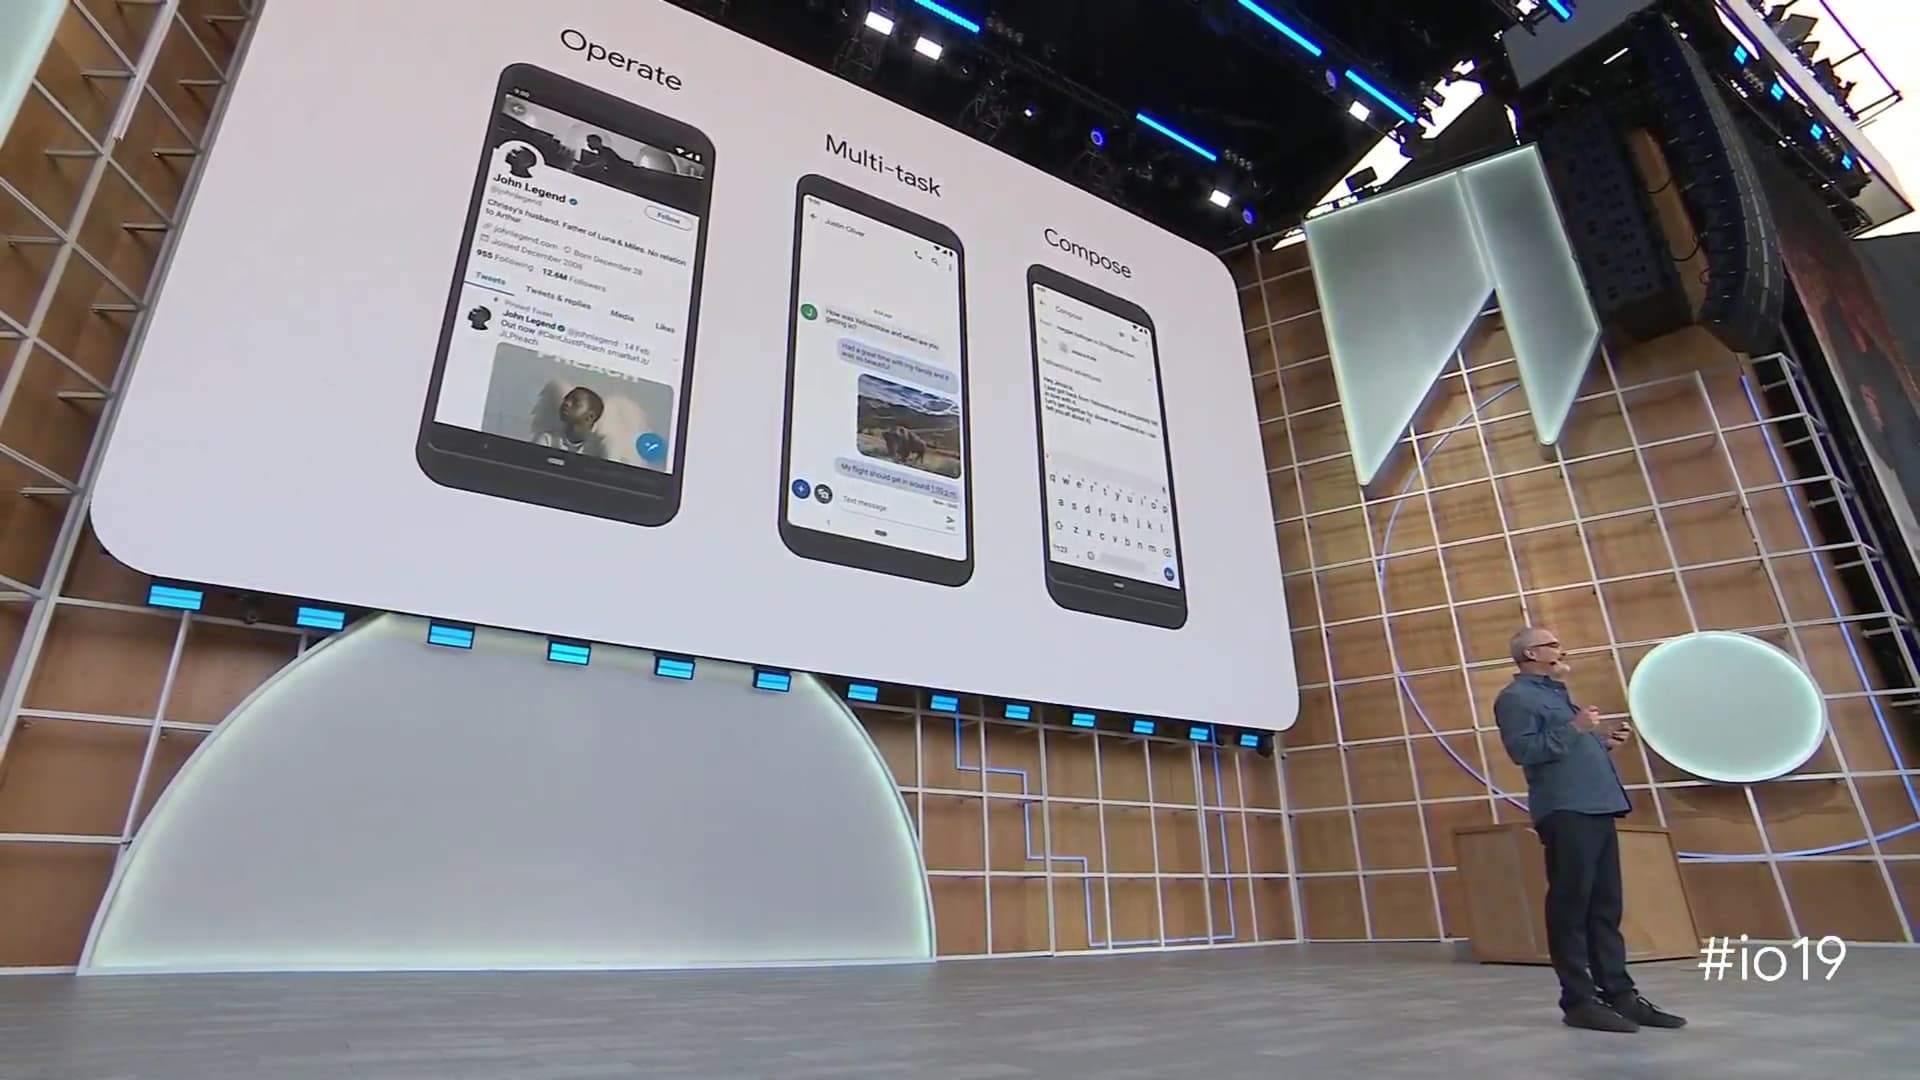 Next generation Google Assistant shown off at Google I/O 2019. 